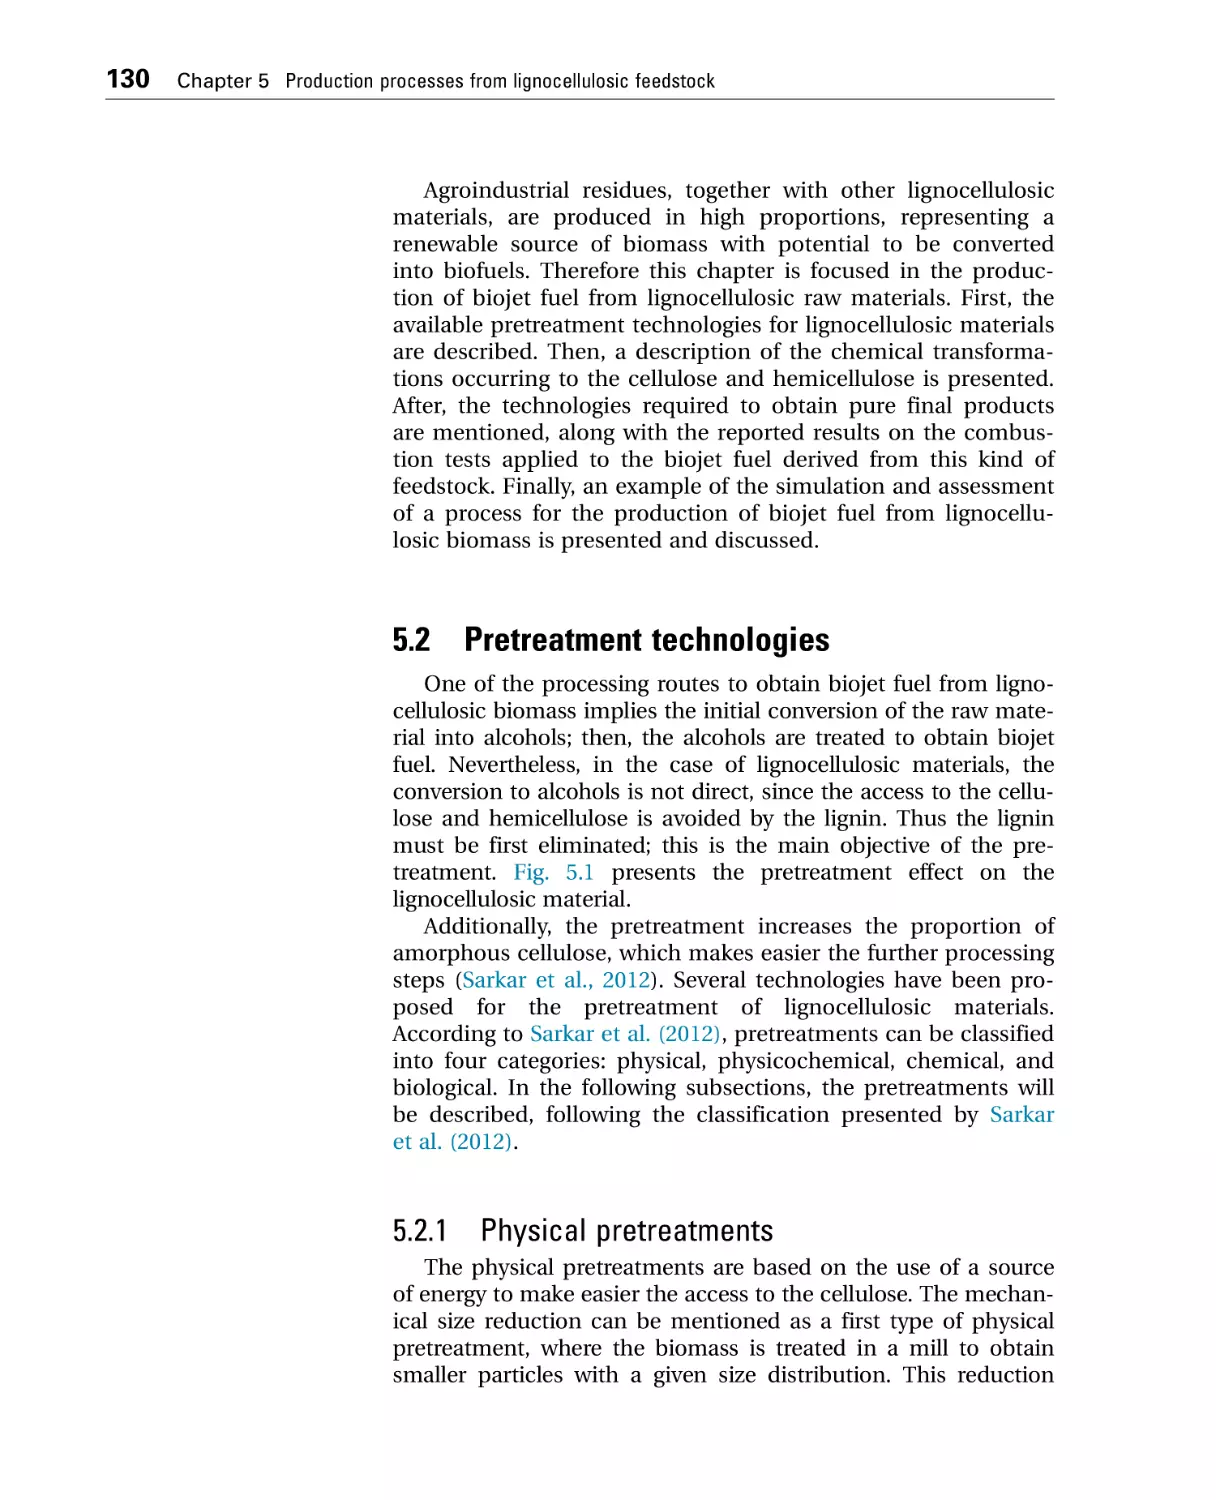 5.2 Pretreatment technologies
5.2.1 Physical pretreatments